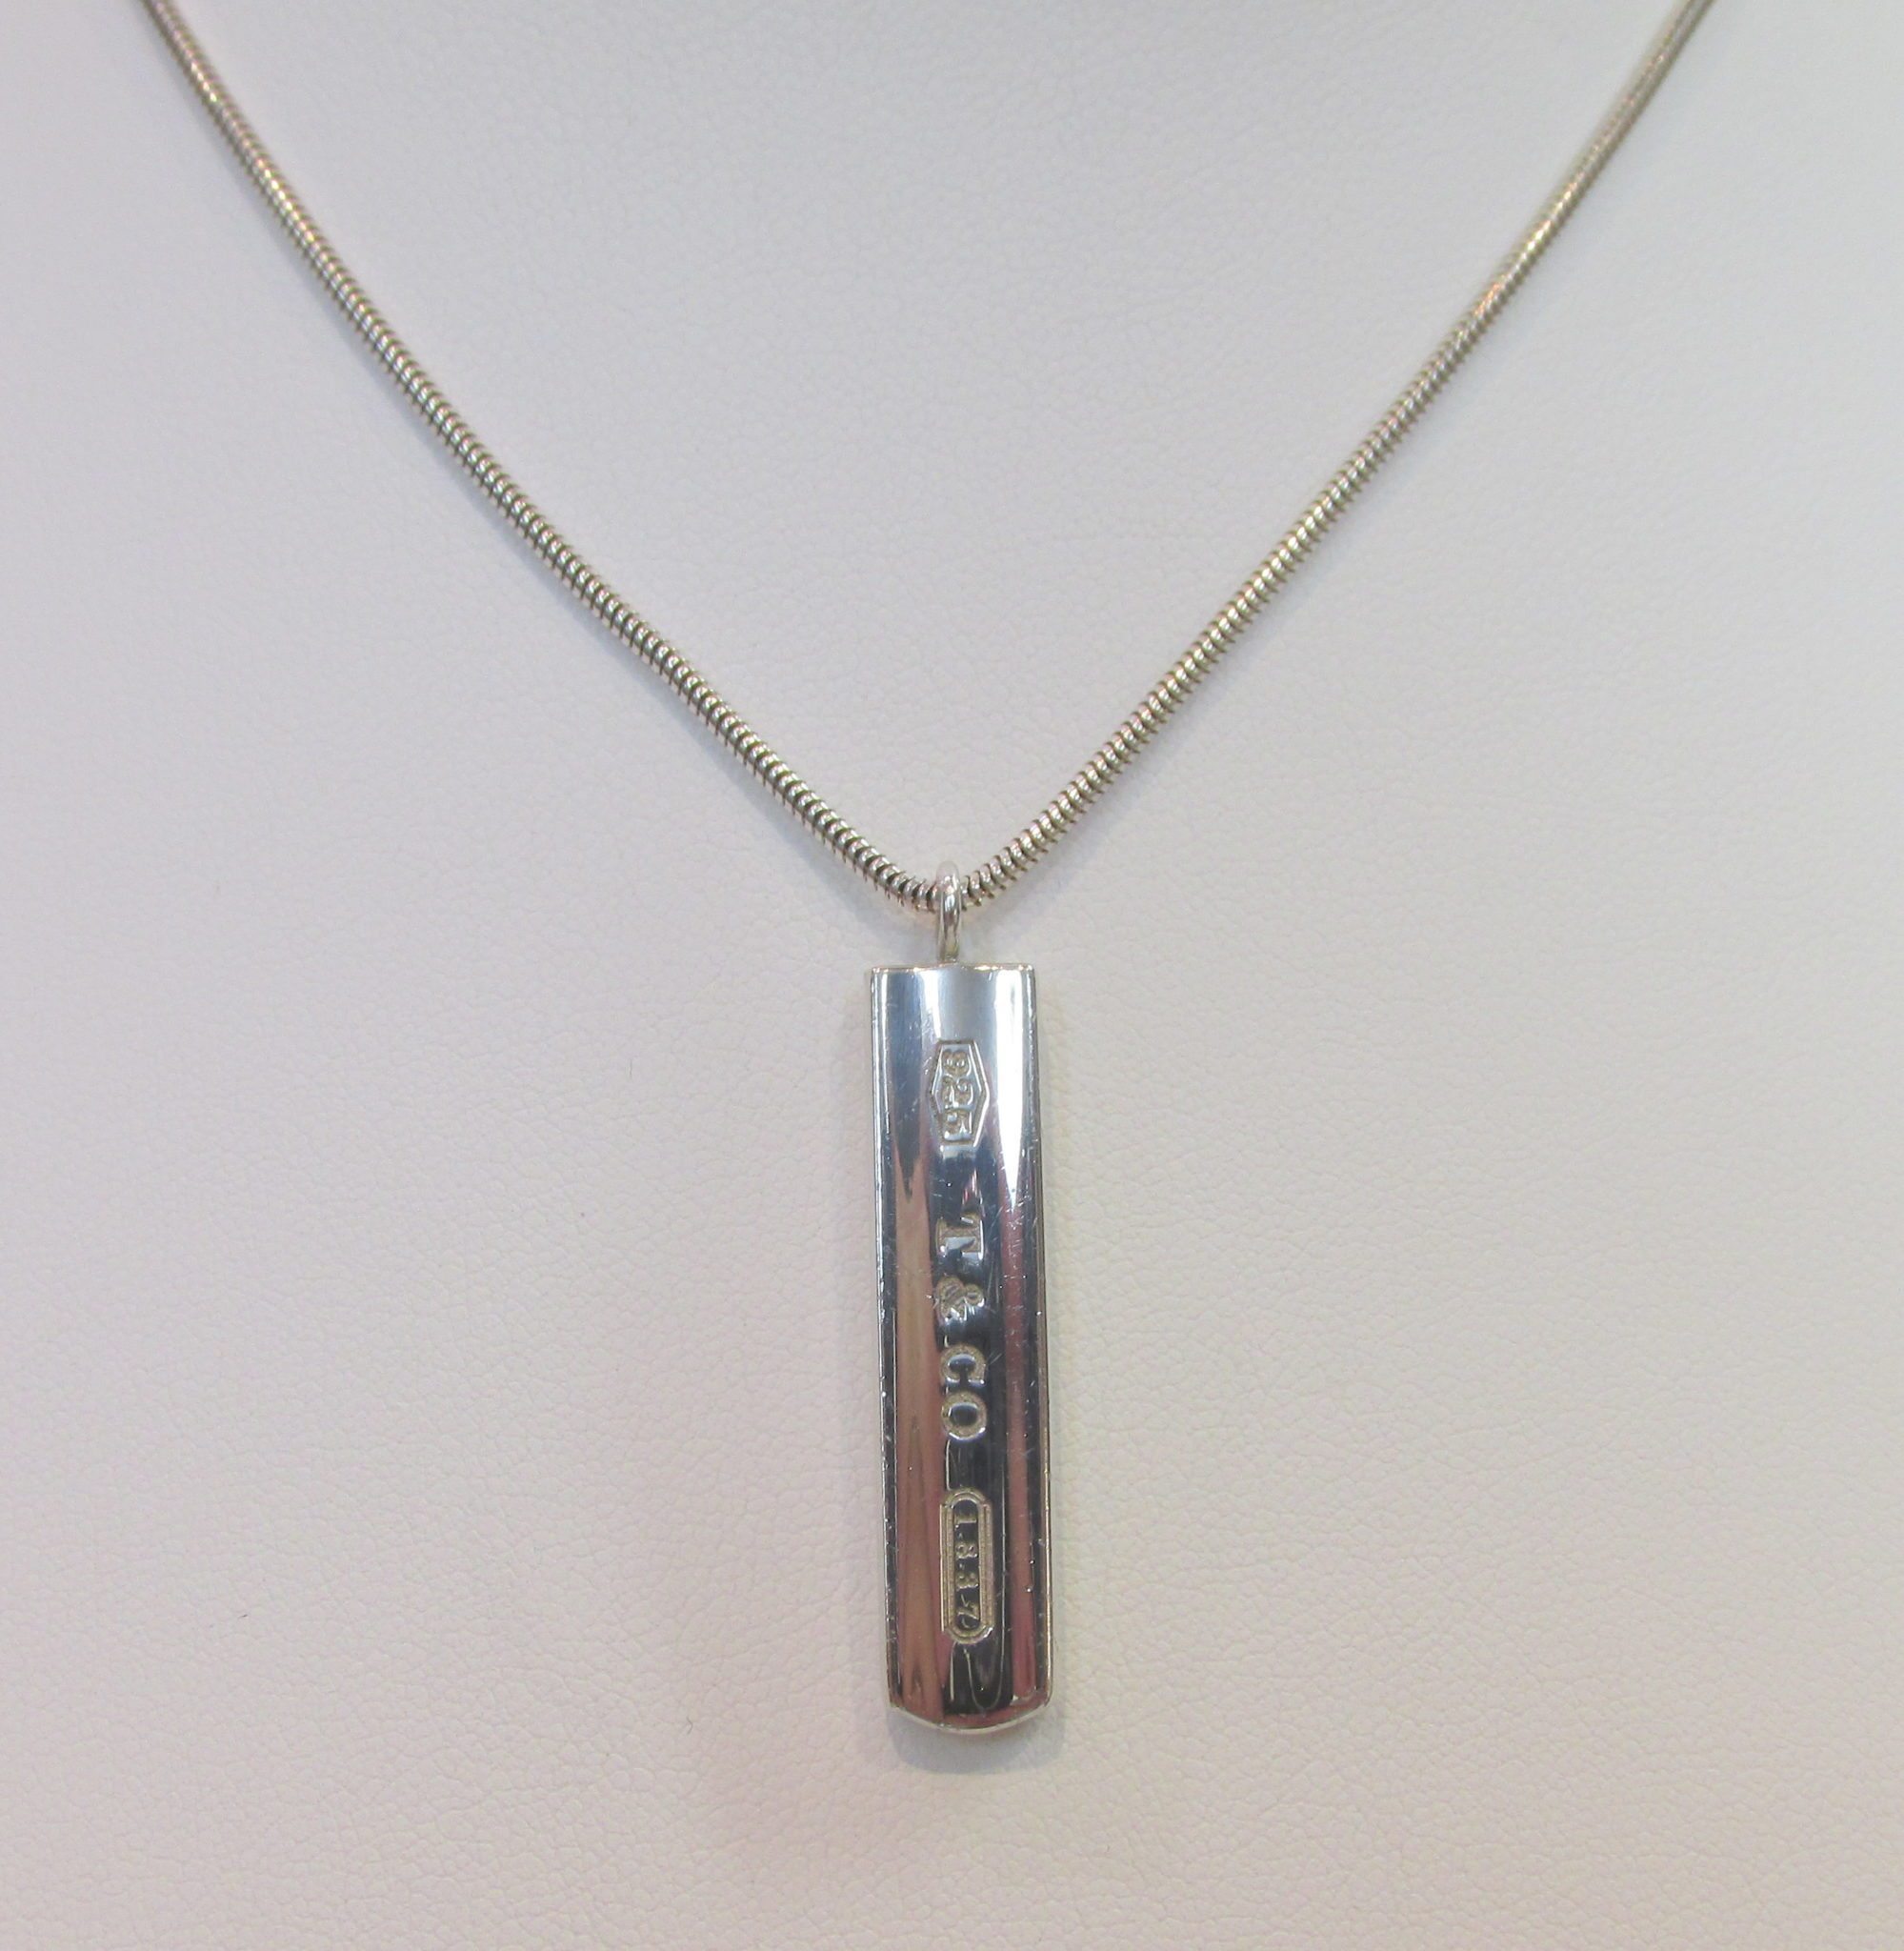 tiffany silver pendant necklace